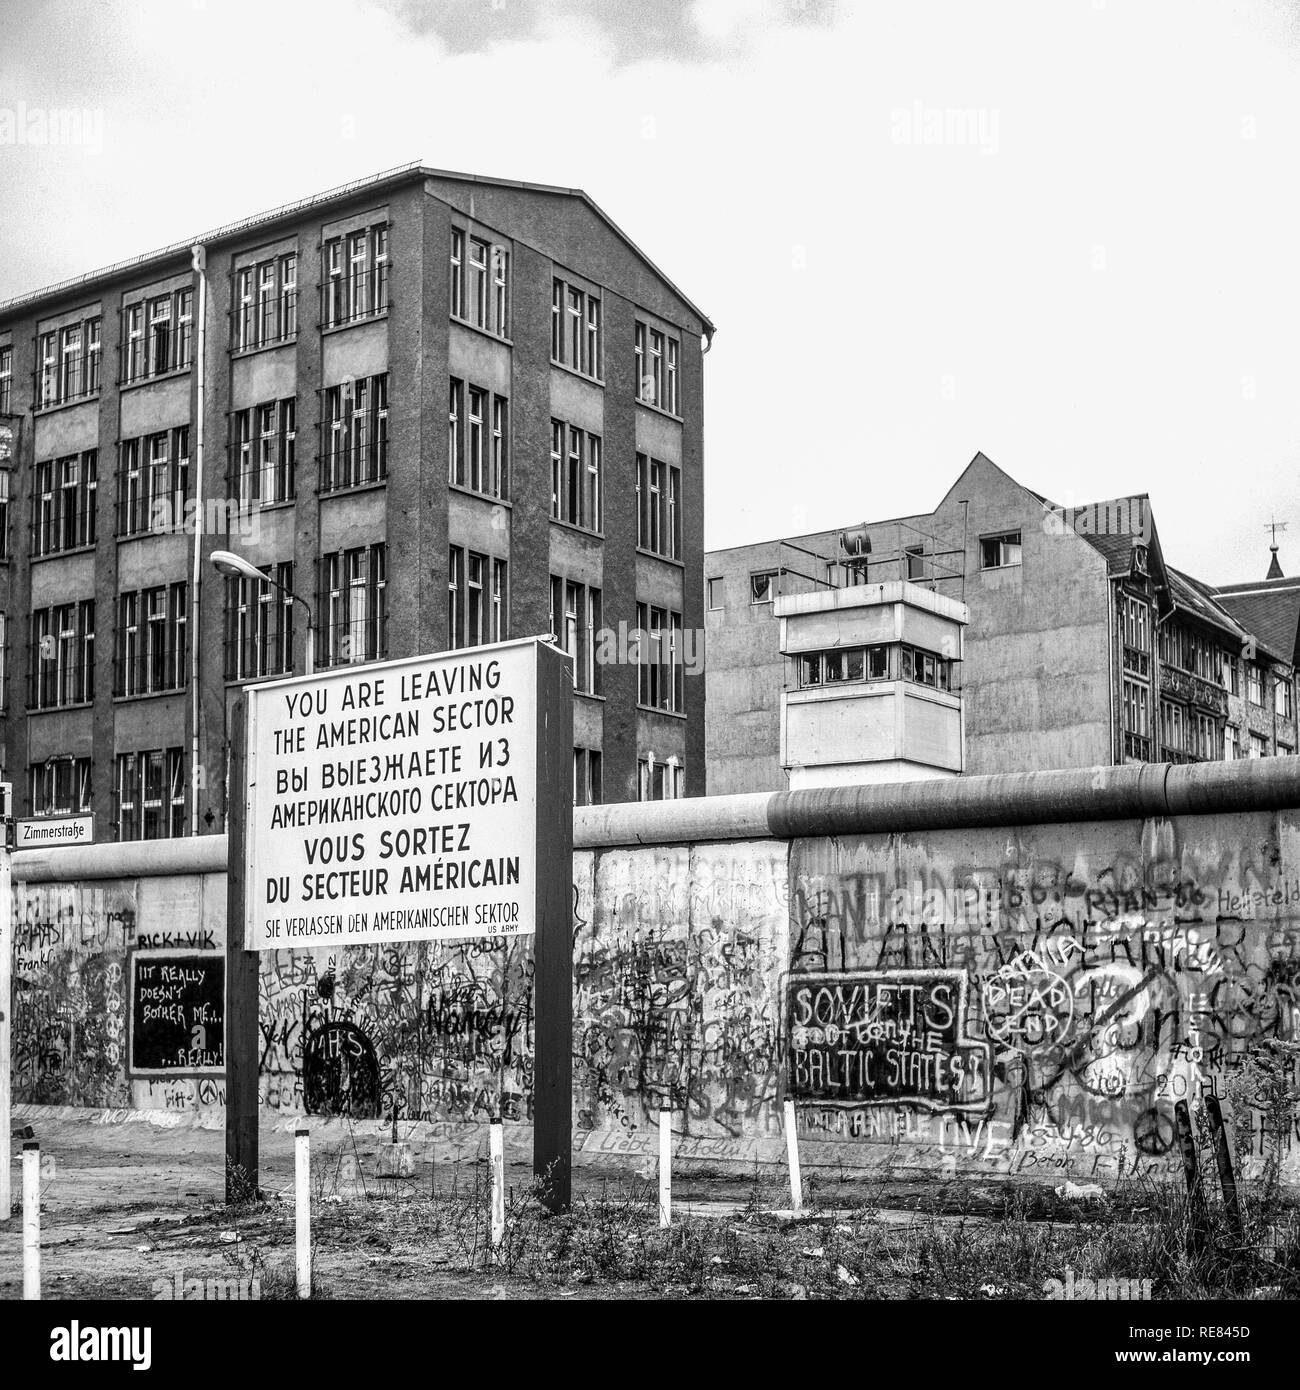 August 1986, leaving American sector warning sign, Berlin Wall graffitis, East Berlin watchtower, Zimmerstrasse street, West Berlin, Germany, Europe, Stock Photo